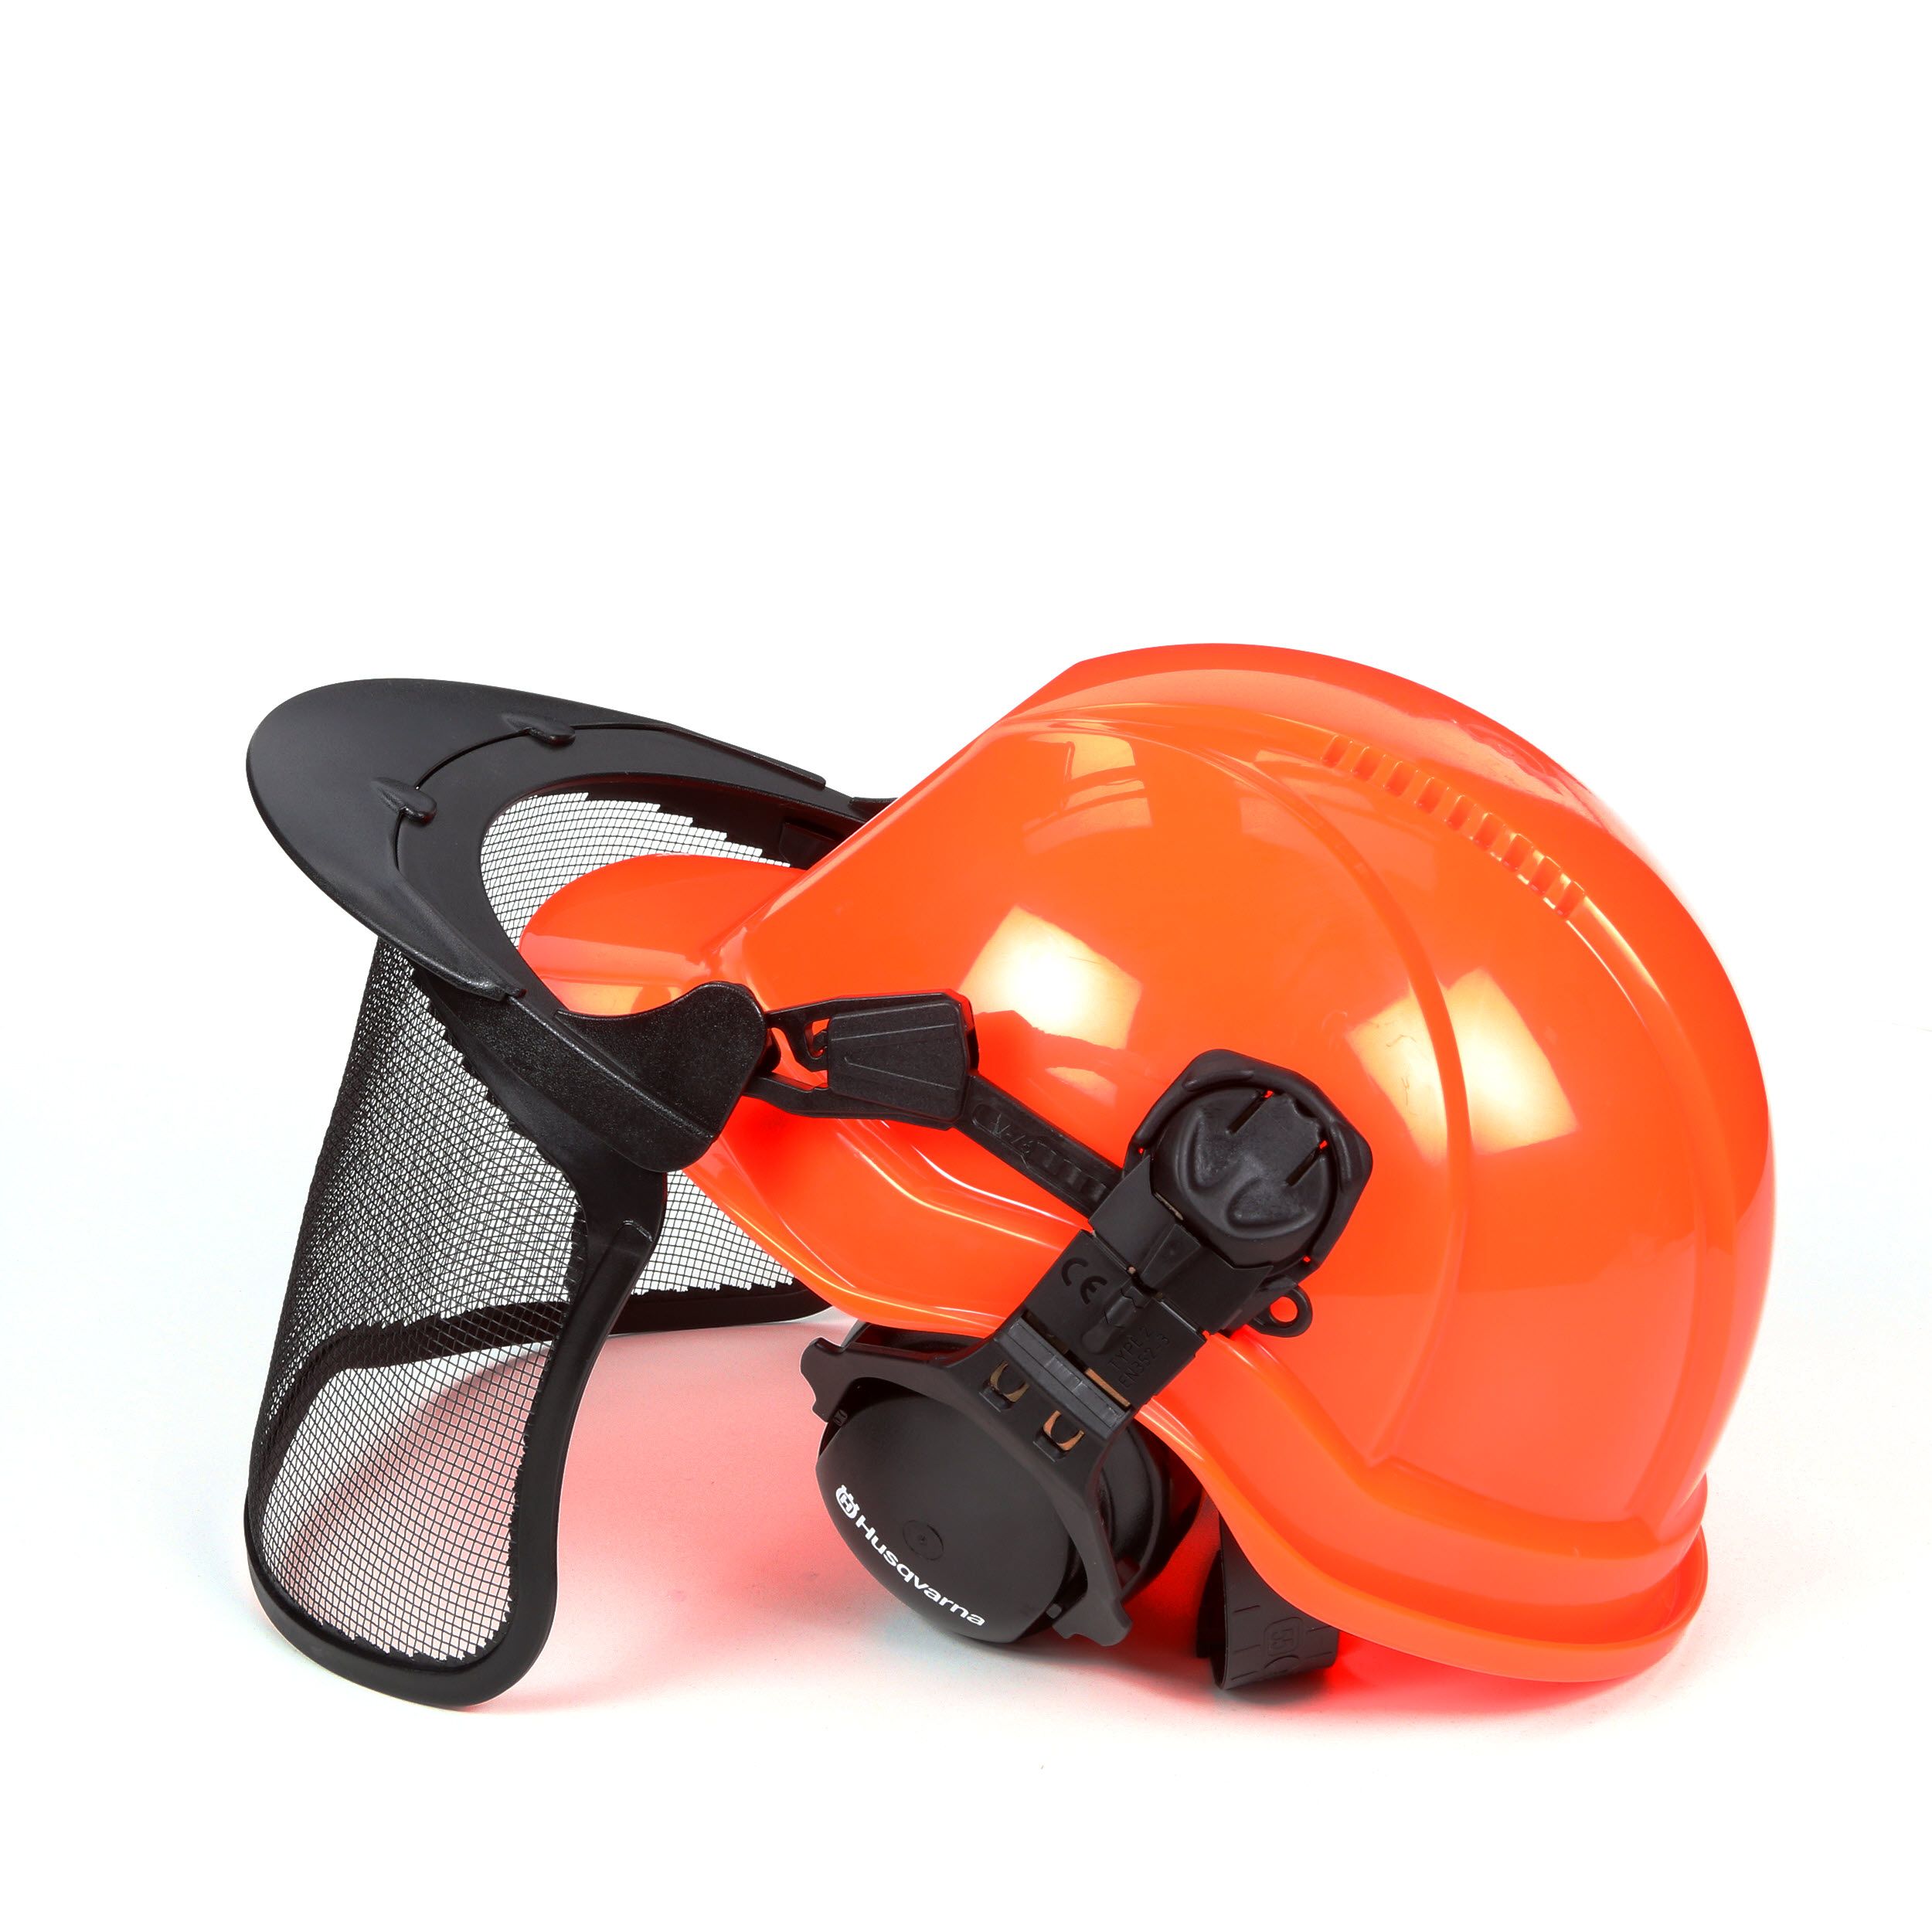 Husqvarna Chainsaw Safety Helmet Clear Perspex Visor 